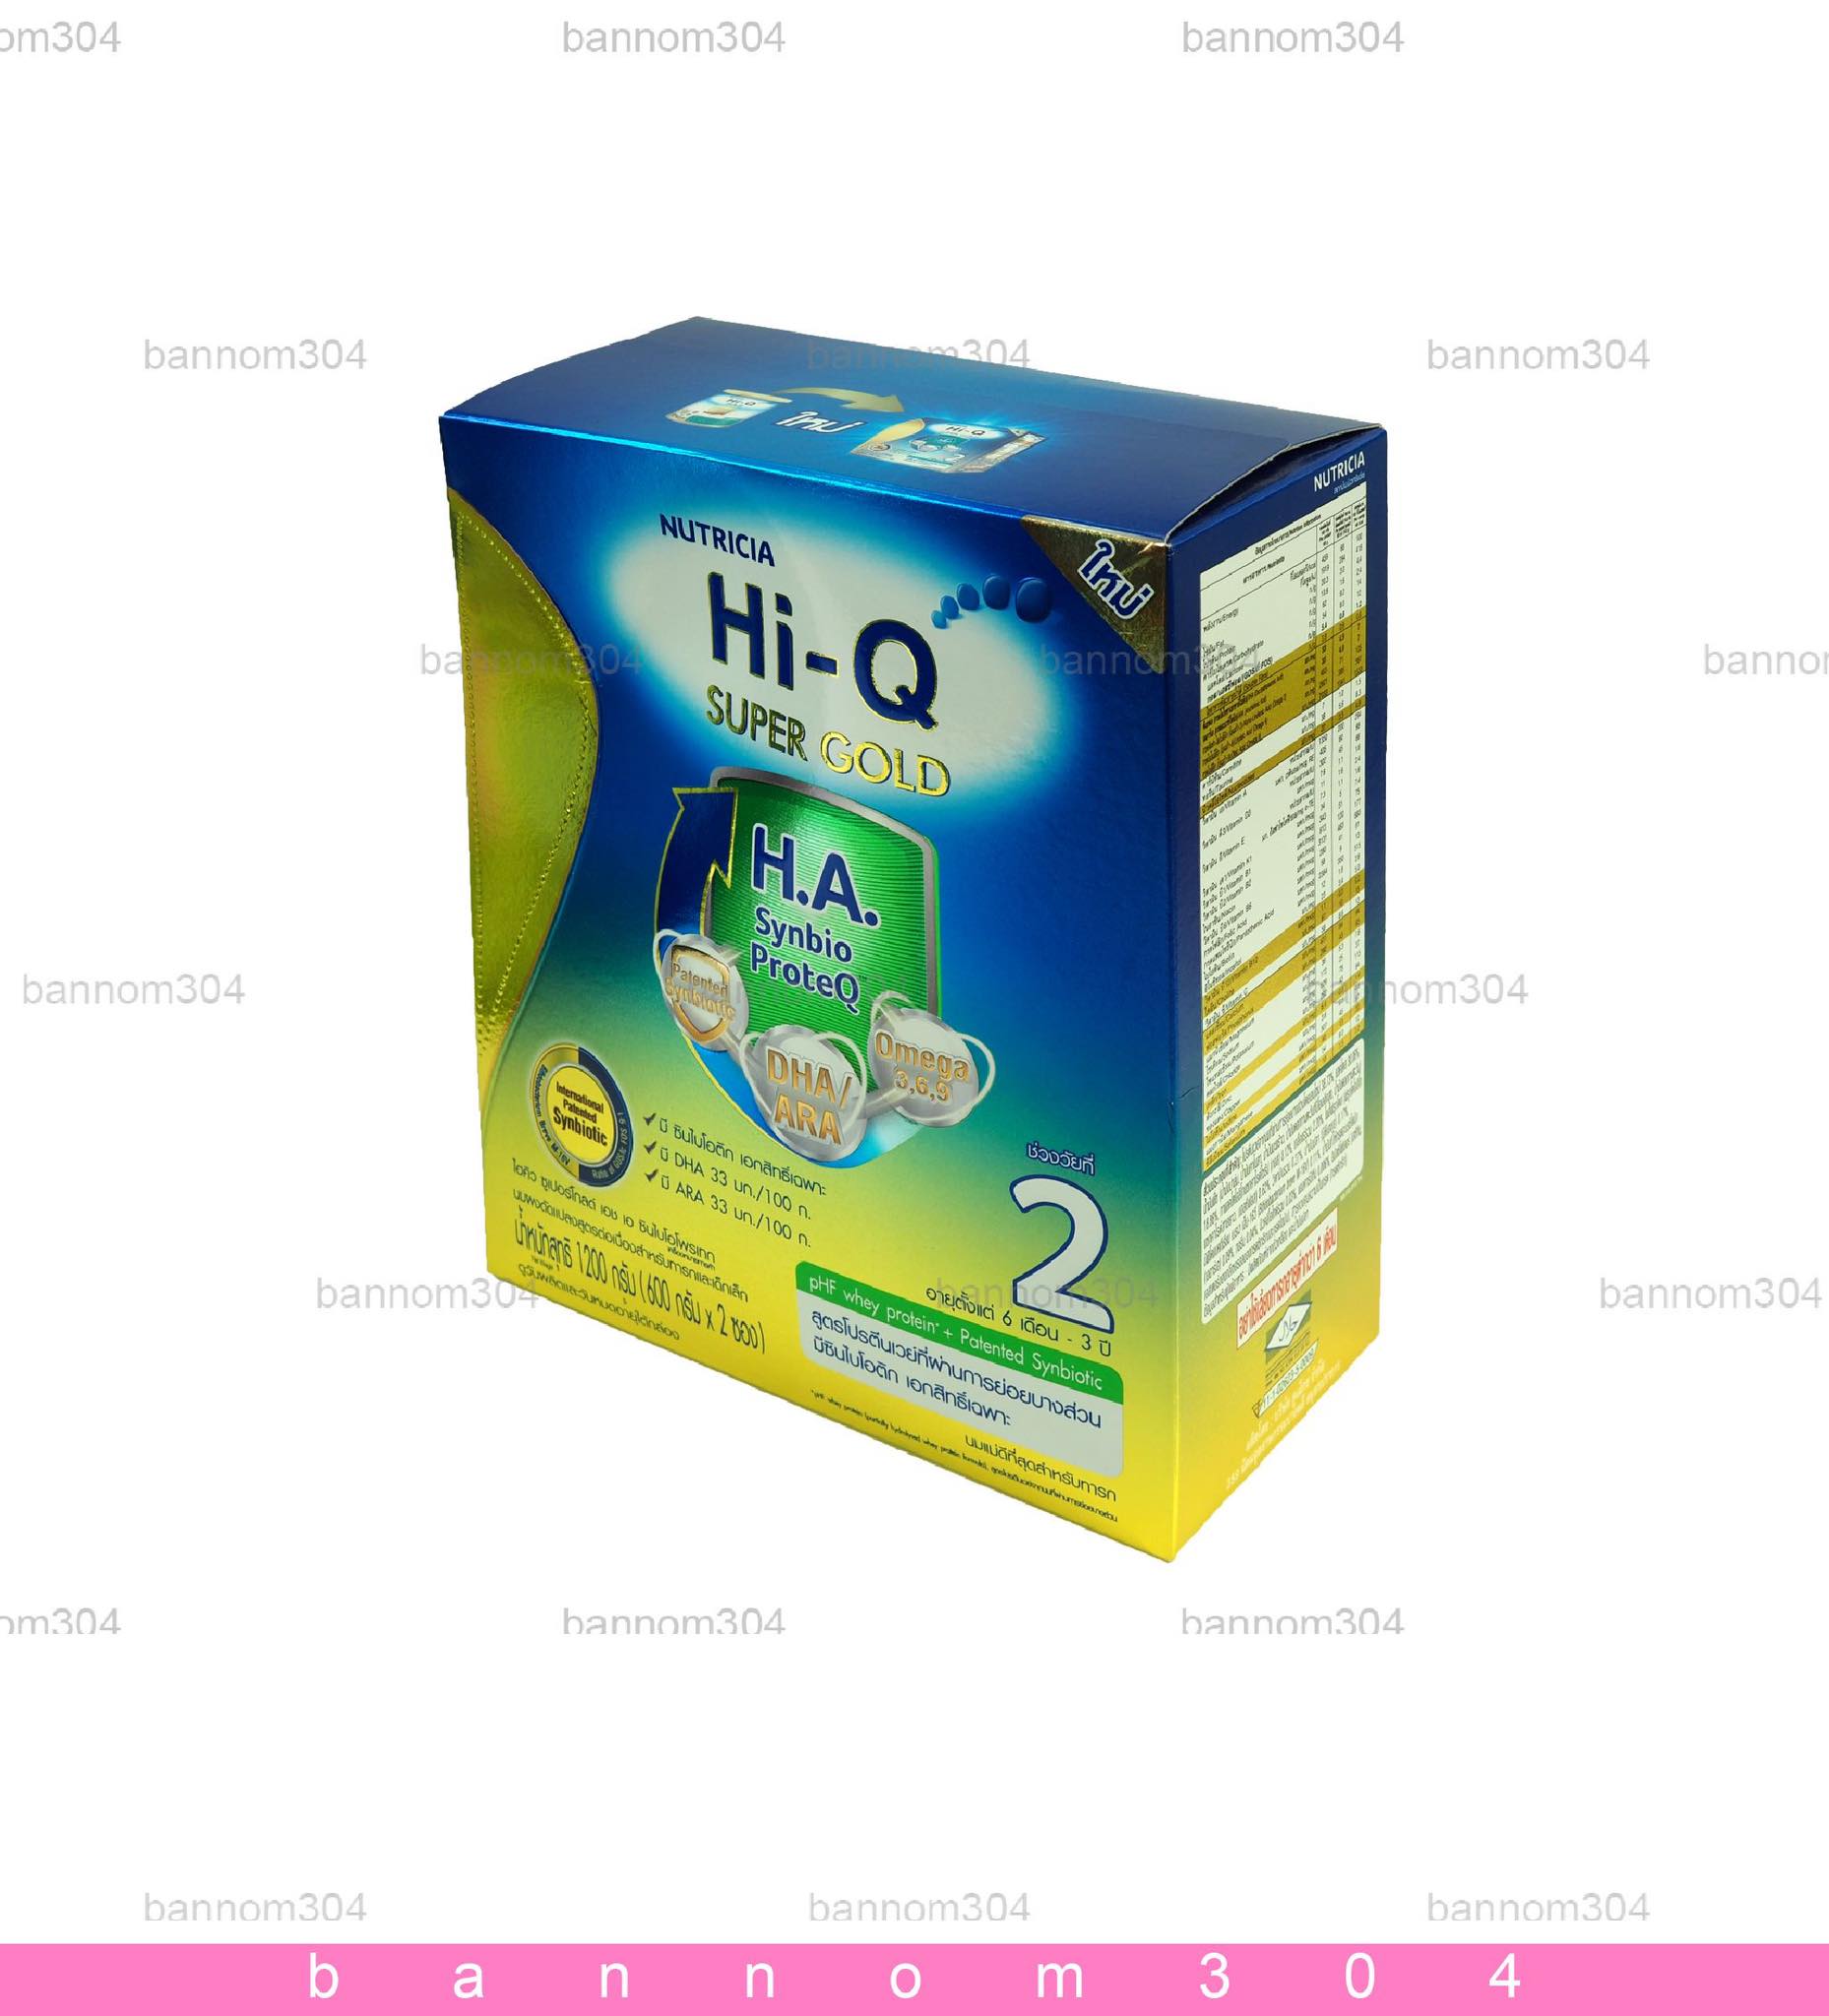 Hi-Q SUPER GOLD H.A.2 Synbio ProteQ นมผง ไฮคิว ซูเปอร์โกลด์ เอชเอ สูตร 2 ขนาด 1200 กรัม